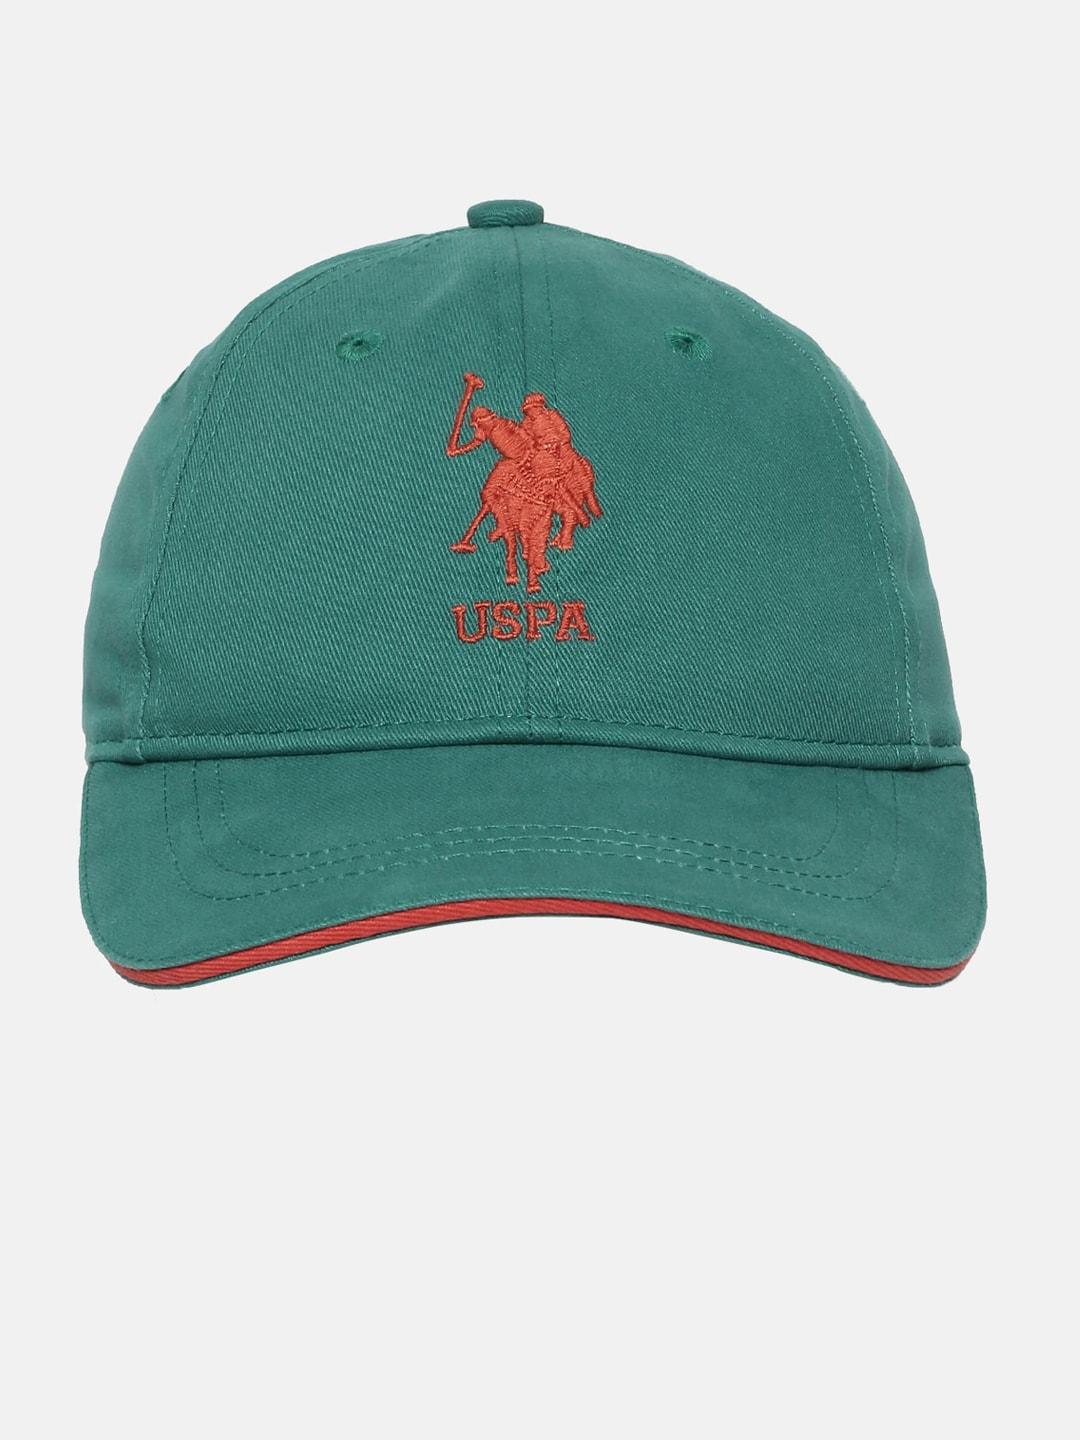 u-s-polo-assn-kids-green-embroidered-cotton-baseball-cap